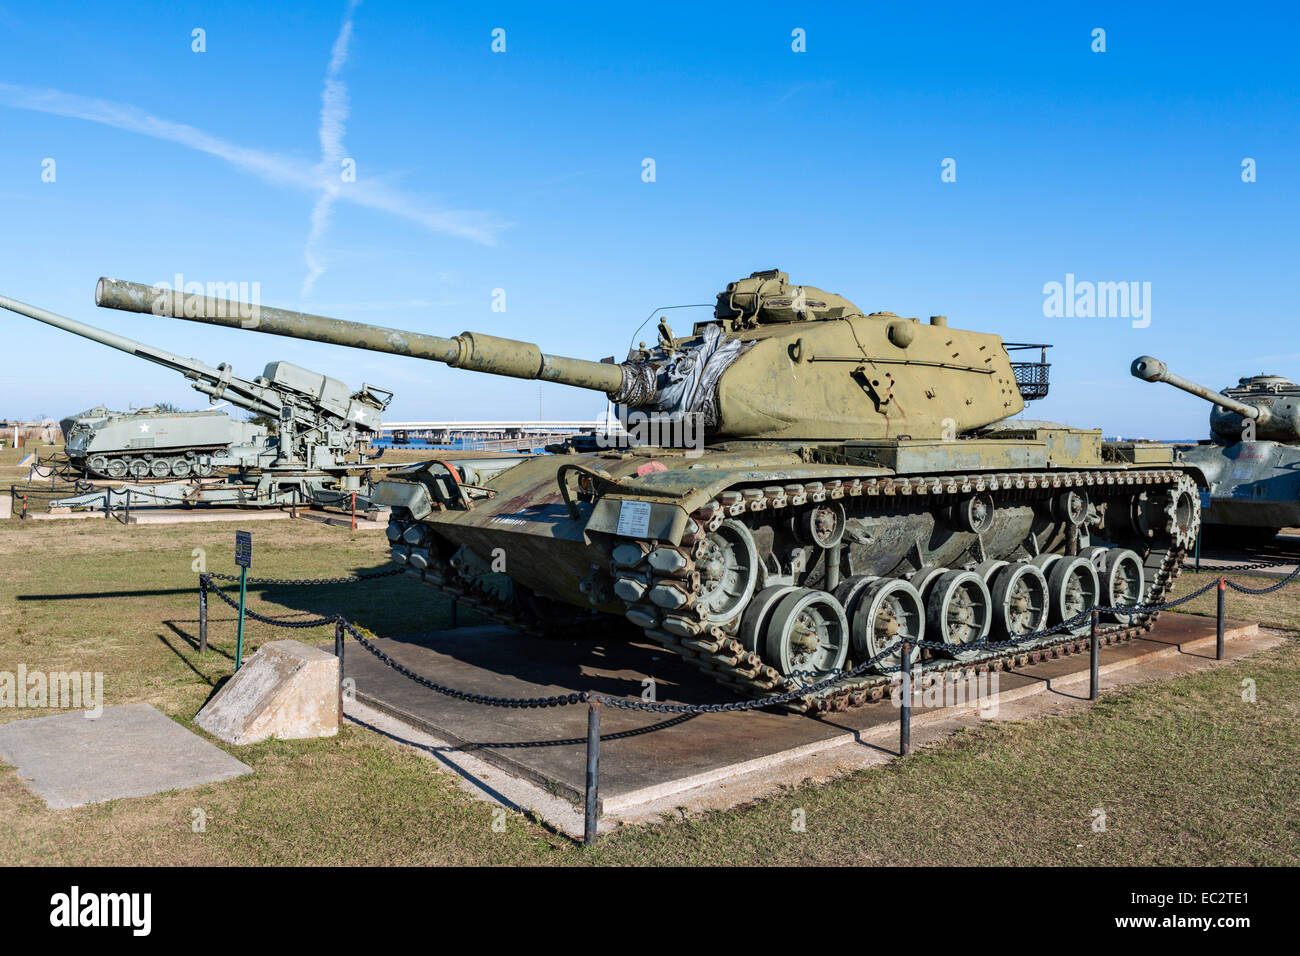 A US M-60A1 Patton Main Battle Tank, USS Alabama Battleship Memorial Park, Mobile, Alabama, USA Stock Photo